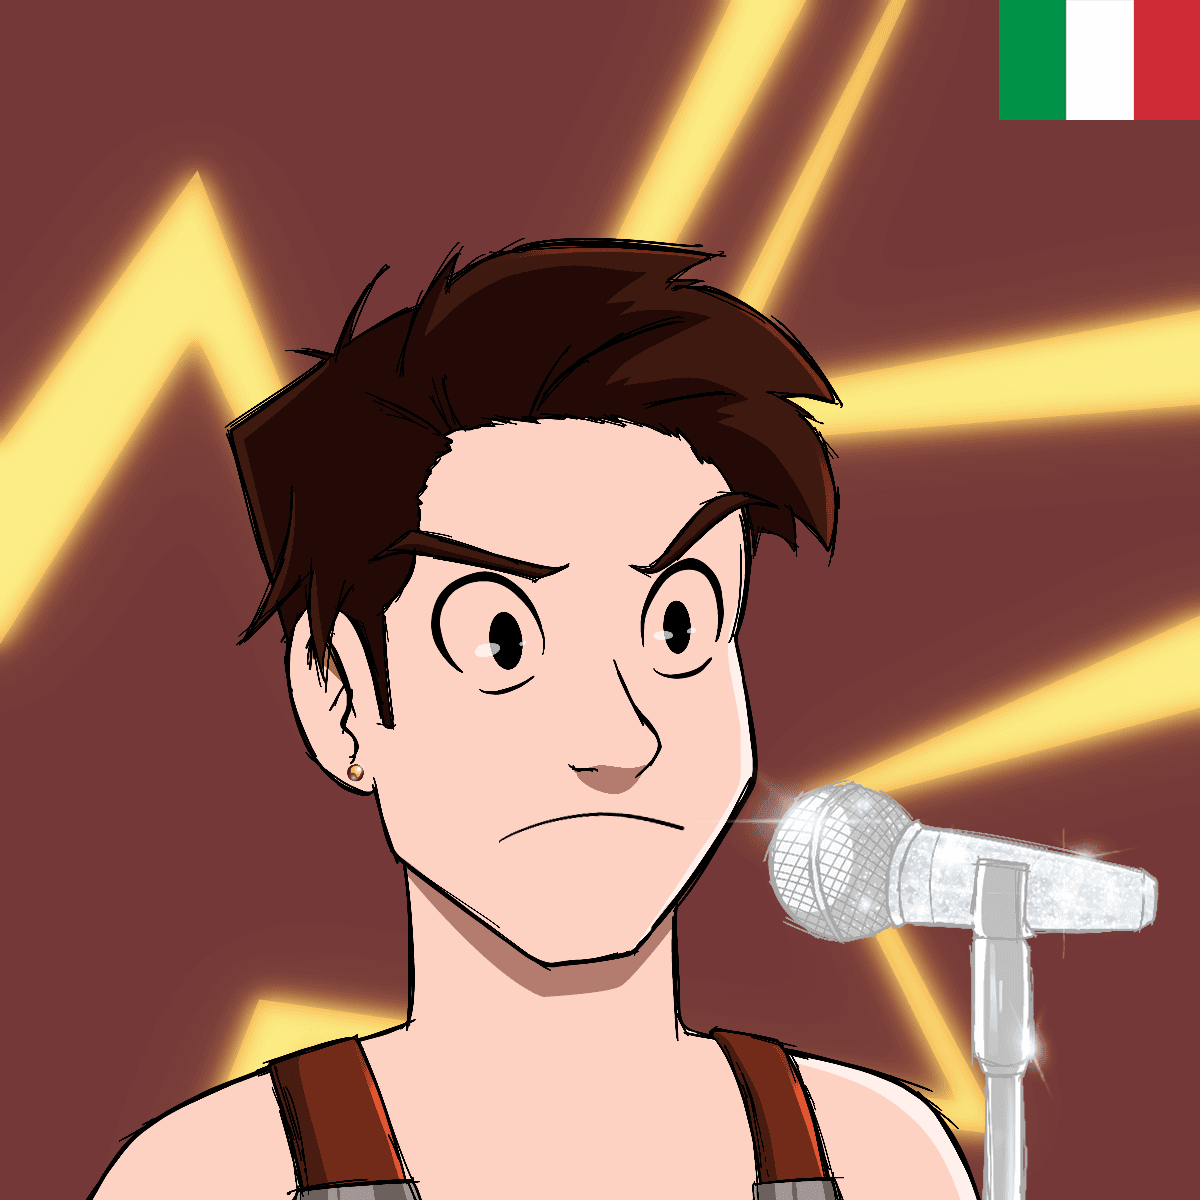 Italian-Rockstar